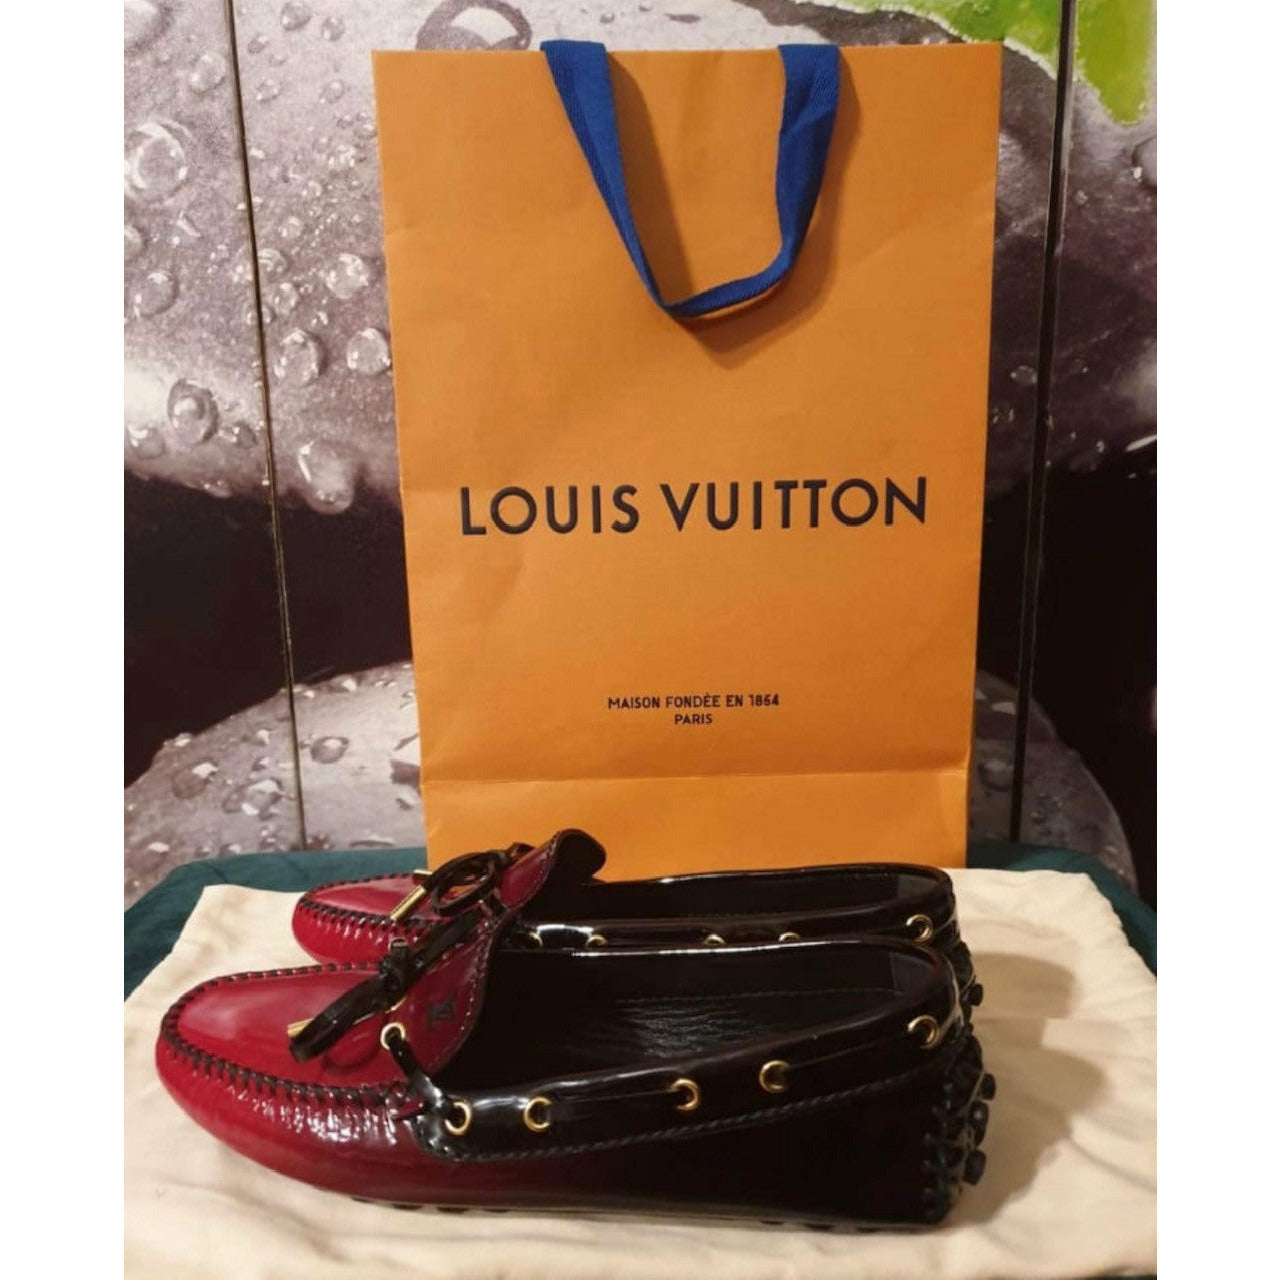 Louis Vuitton Patent leather moccasins size 36